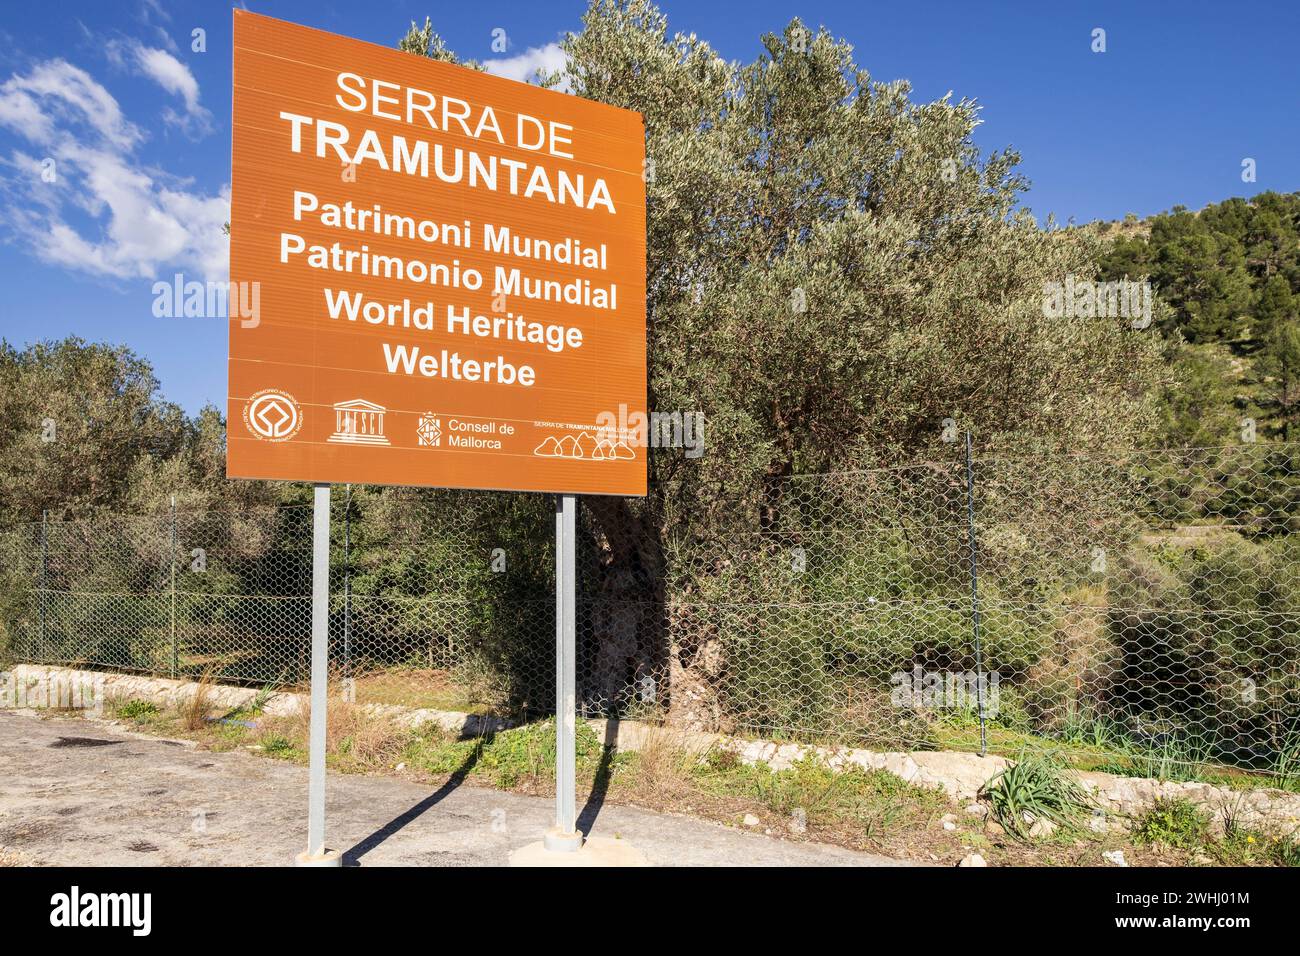 Cartel de la sierra de Tramuntana como patrimonio de la humanidad Stock Photo